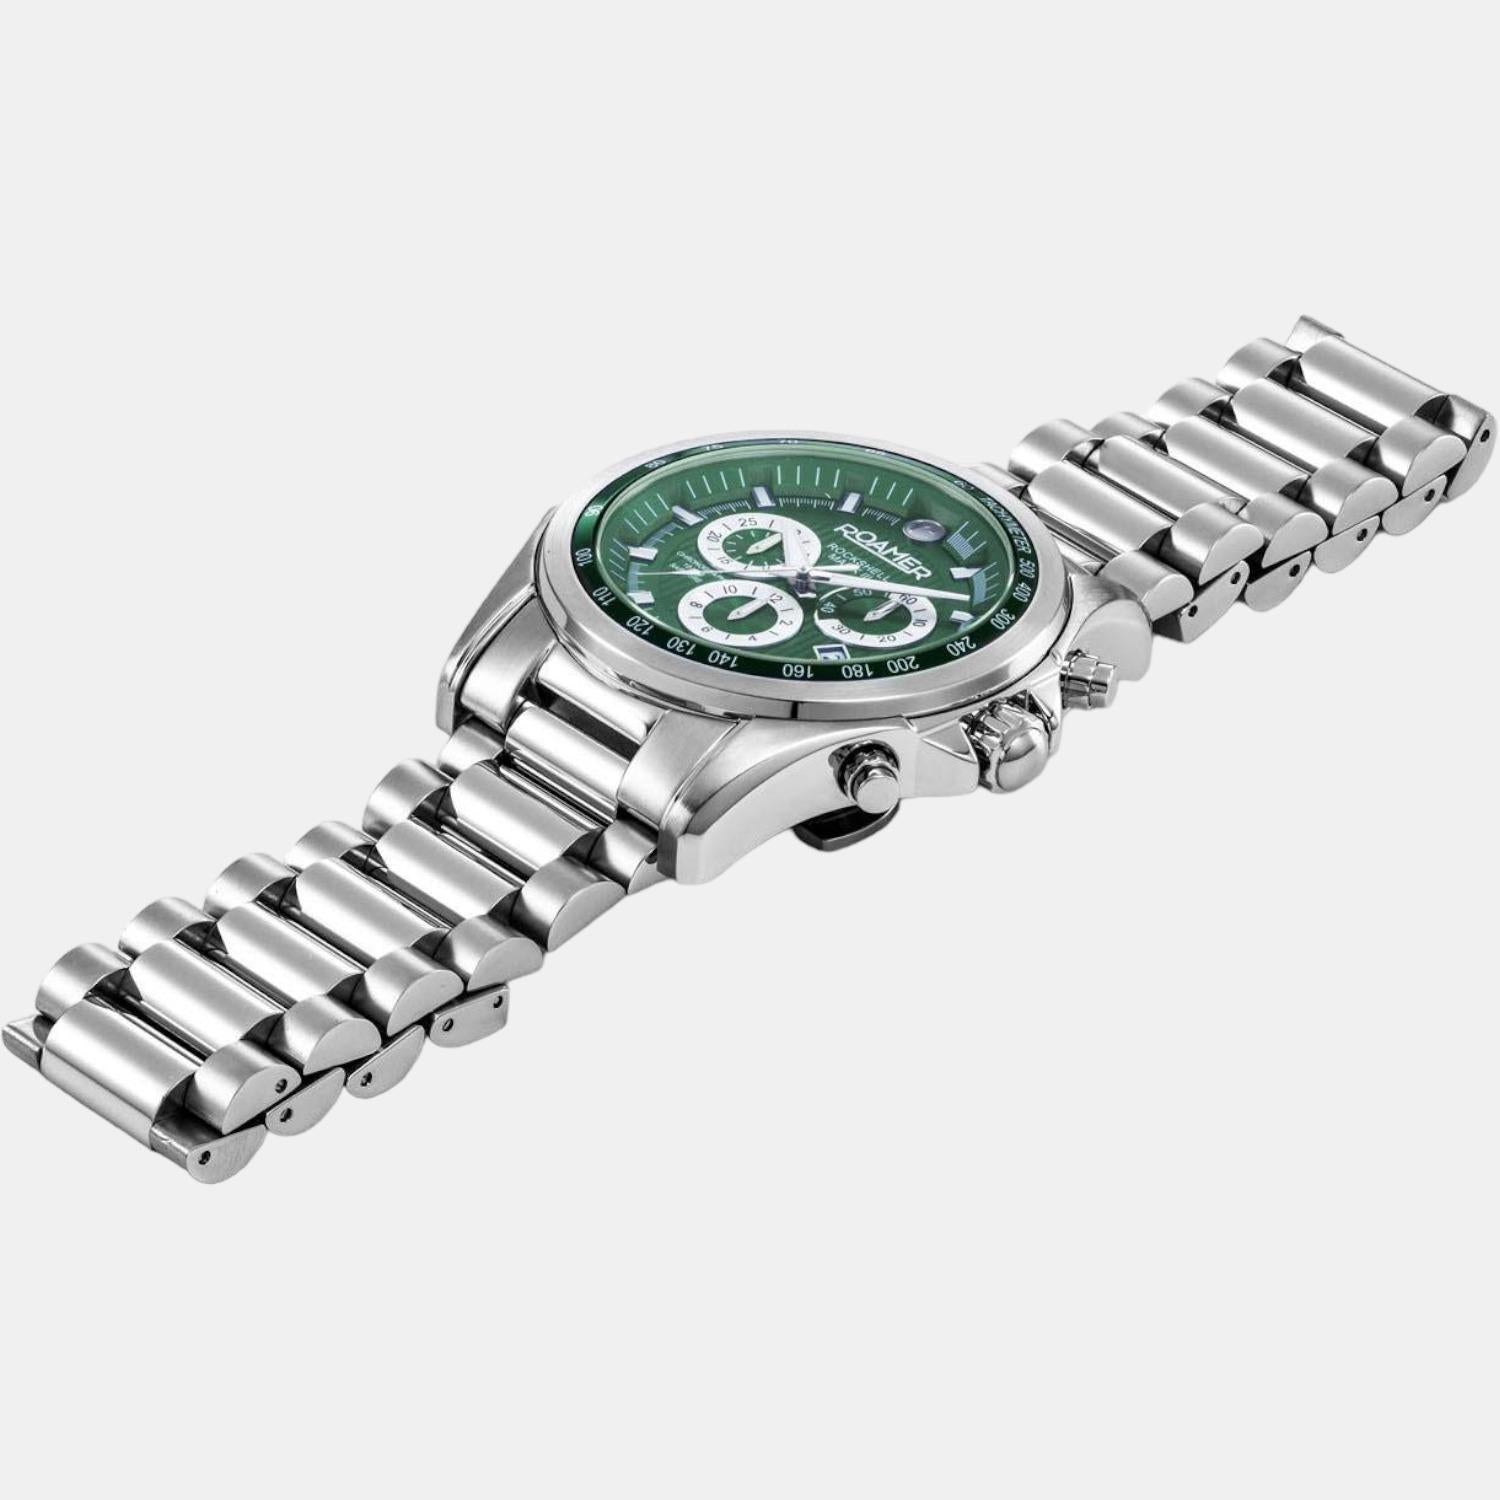 roamer-stainless-steel-green-analog-men-watch-220837-41-75-50